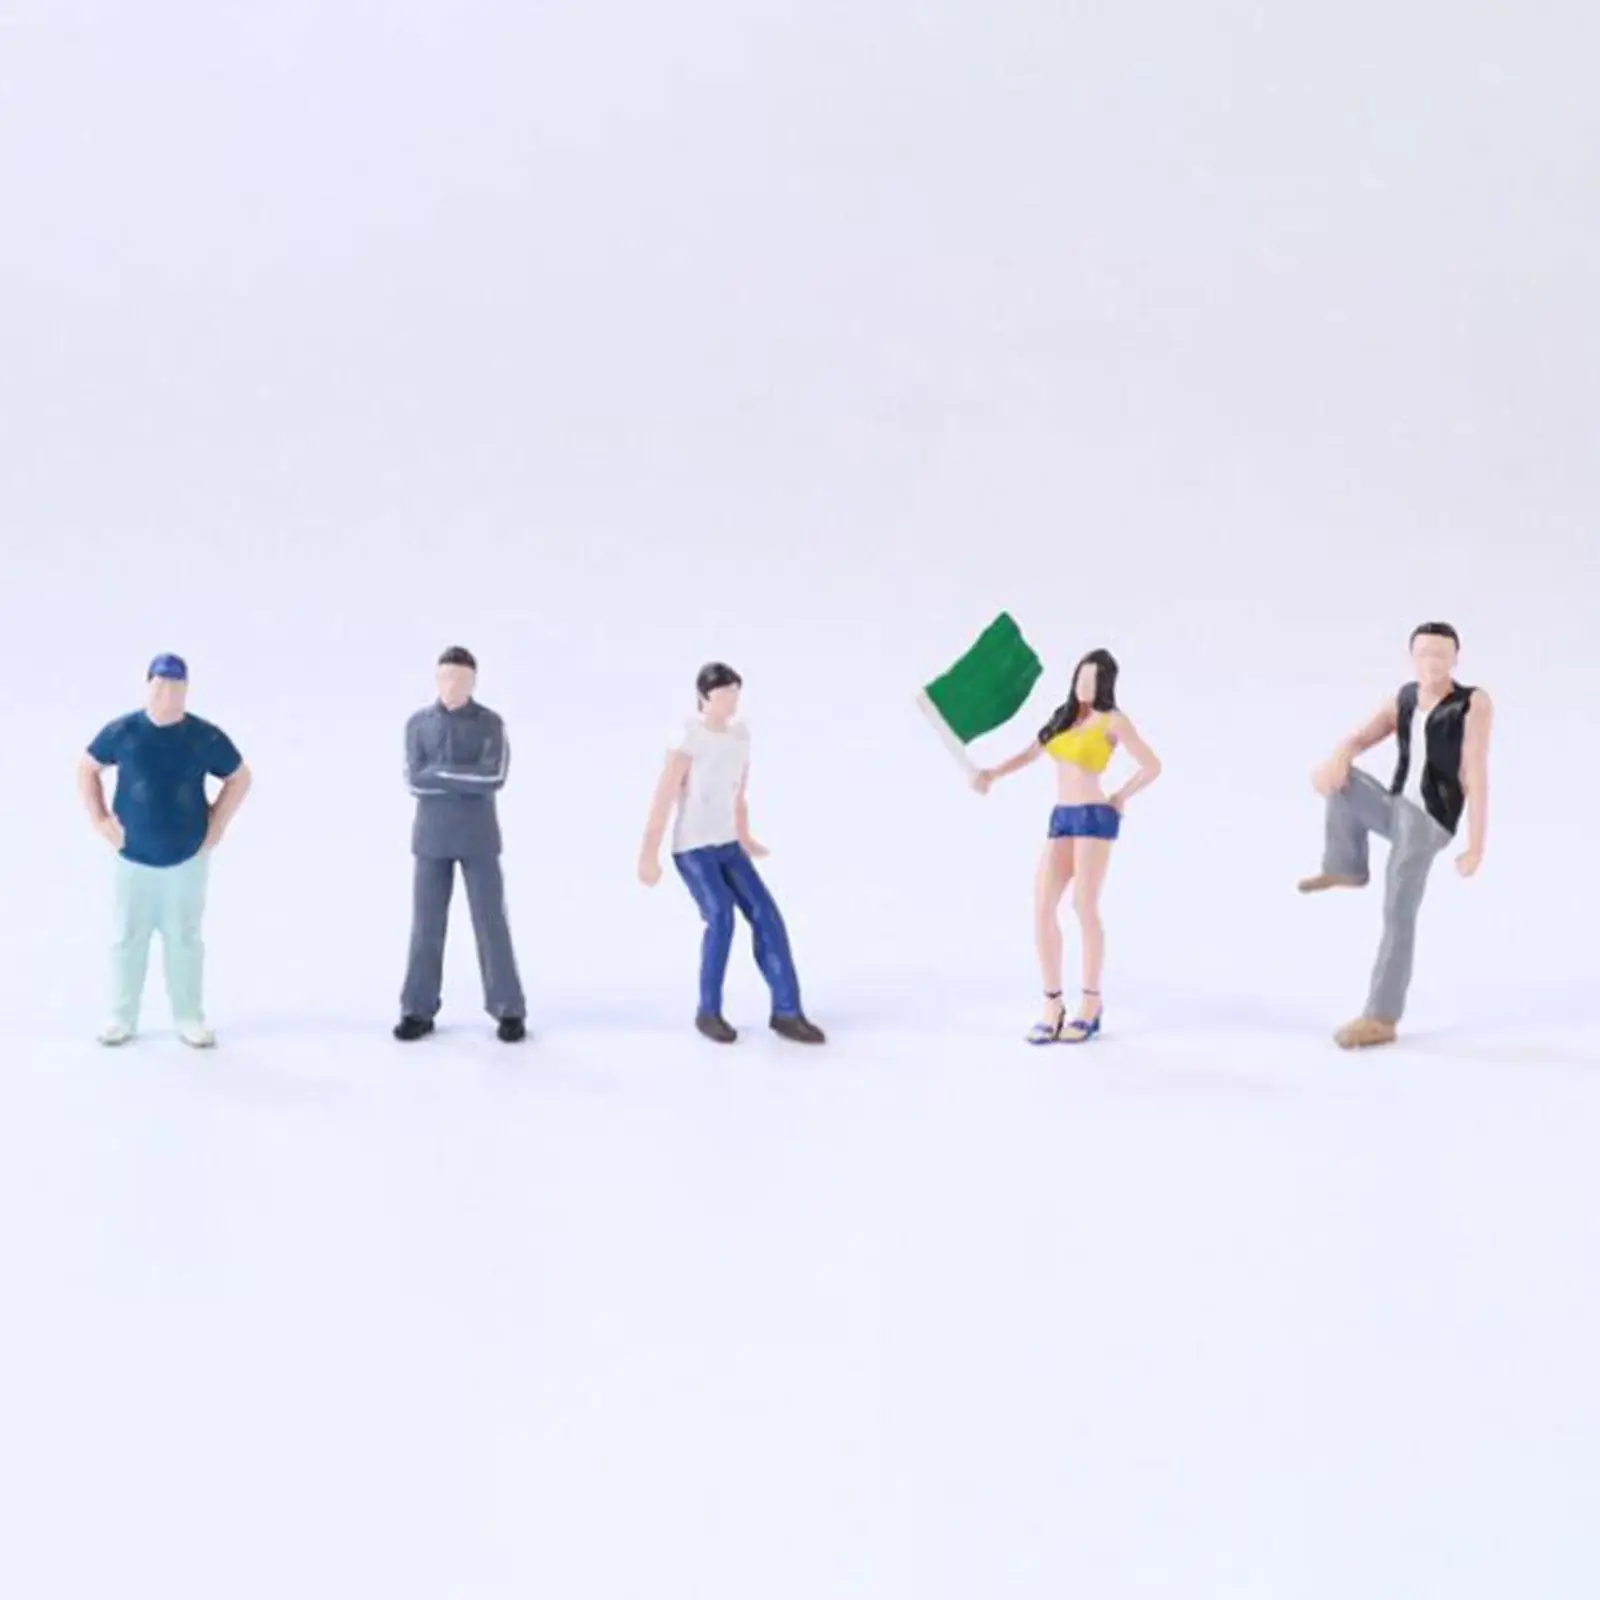 5 Pieces 1/64 Scale People Figure Resin small people Figures for Diorama Sand Table Micro Landscape Miniature Scene Decoration